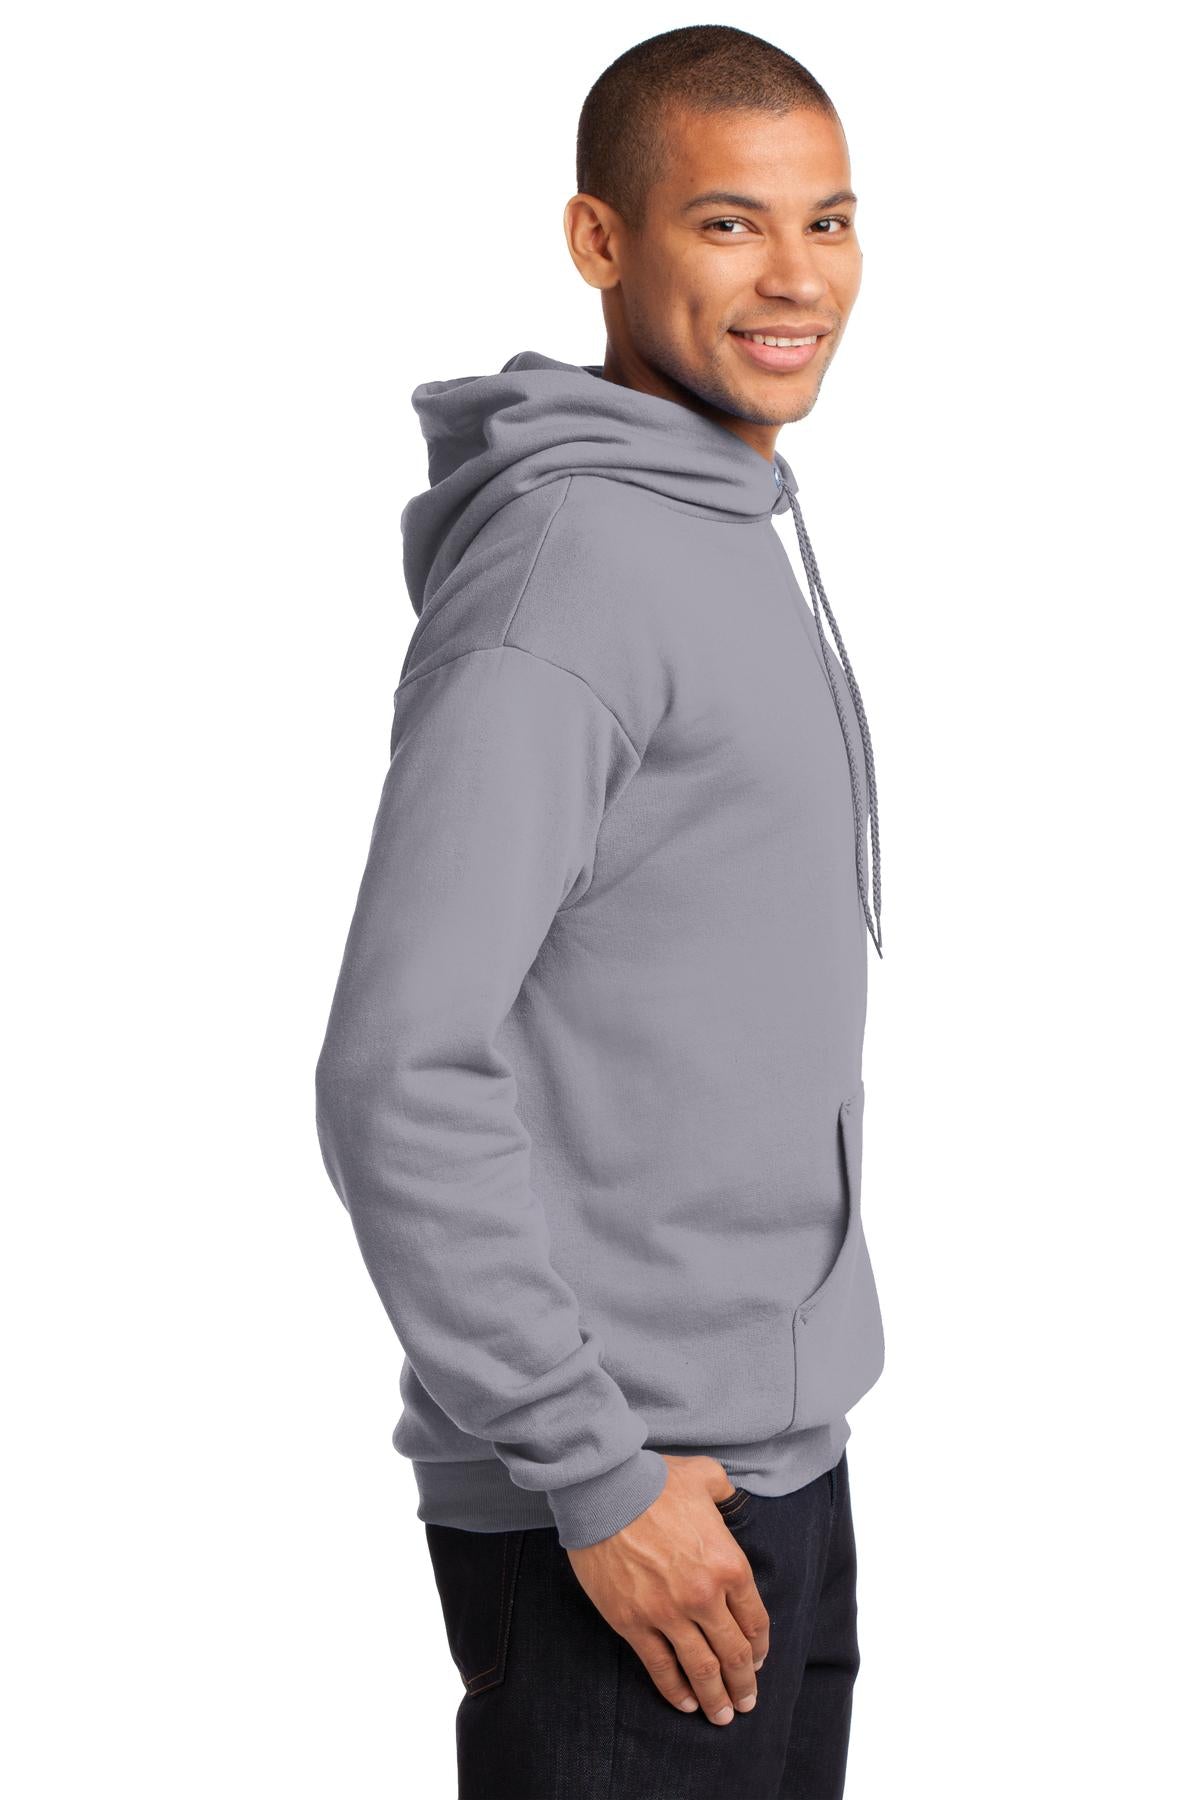 Port & Company® - Core Fleece Pullover Hooded Sweatshirt. PC78H [Silver] - DFW Impression